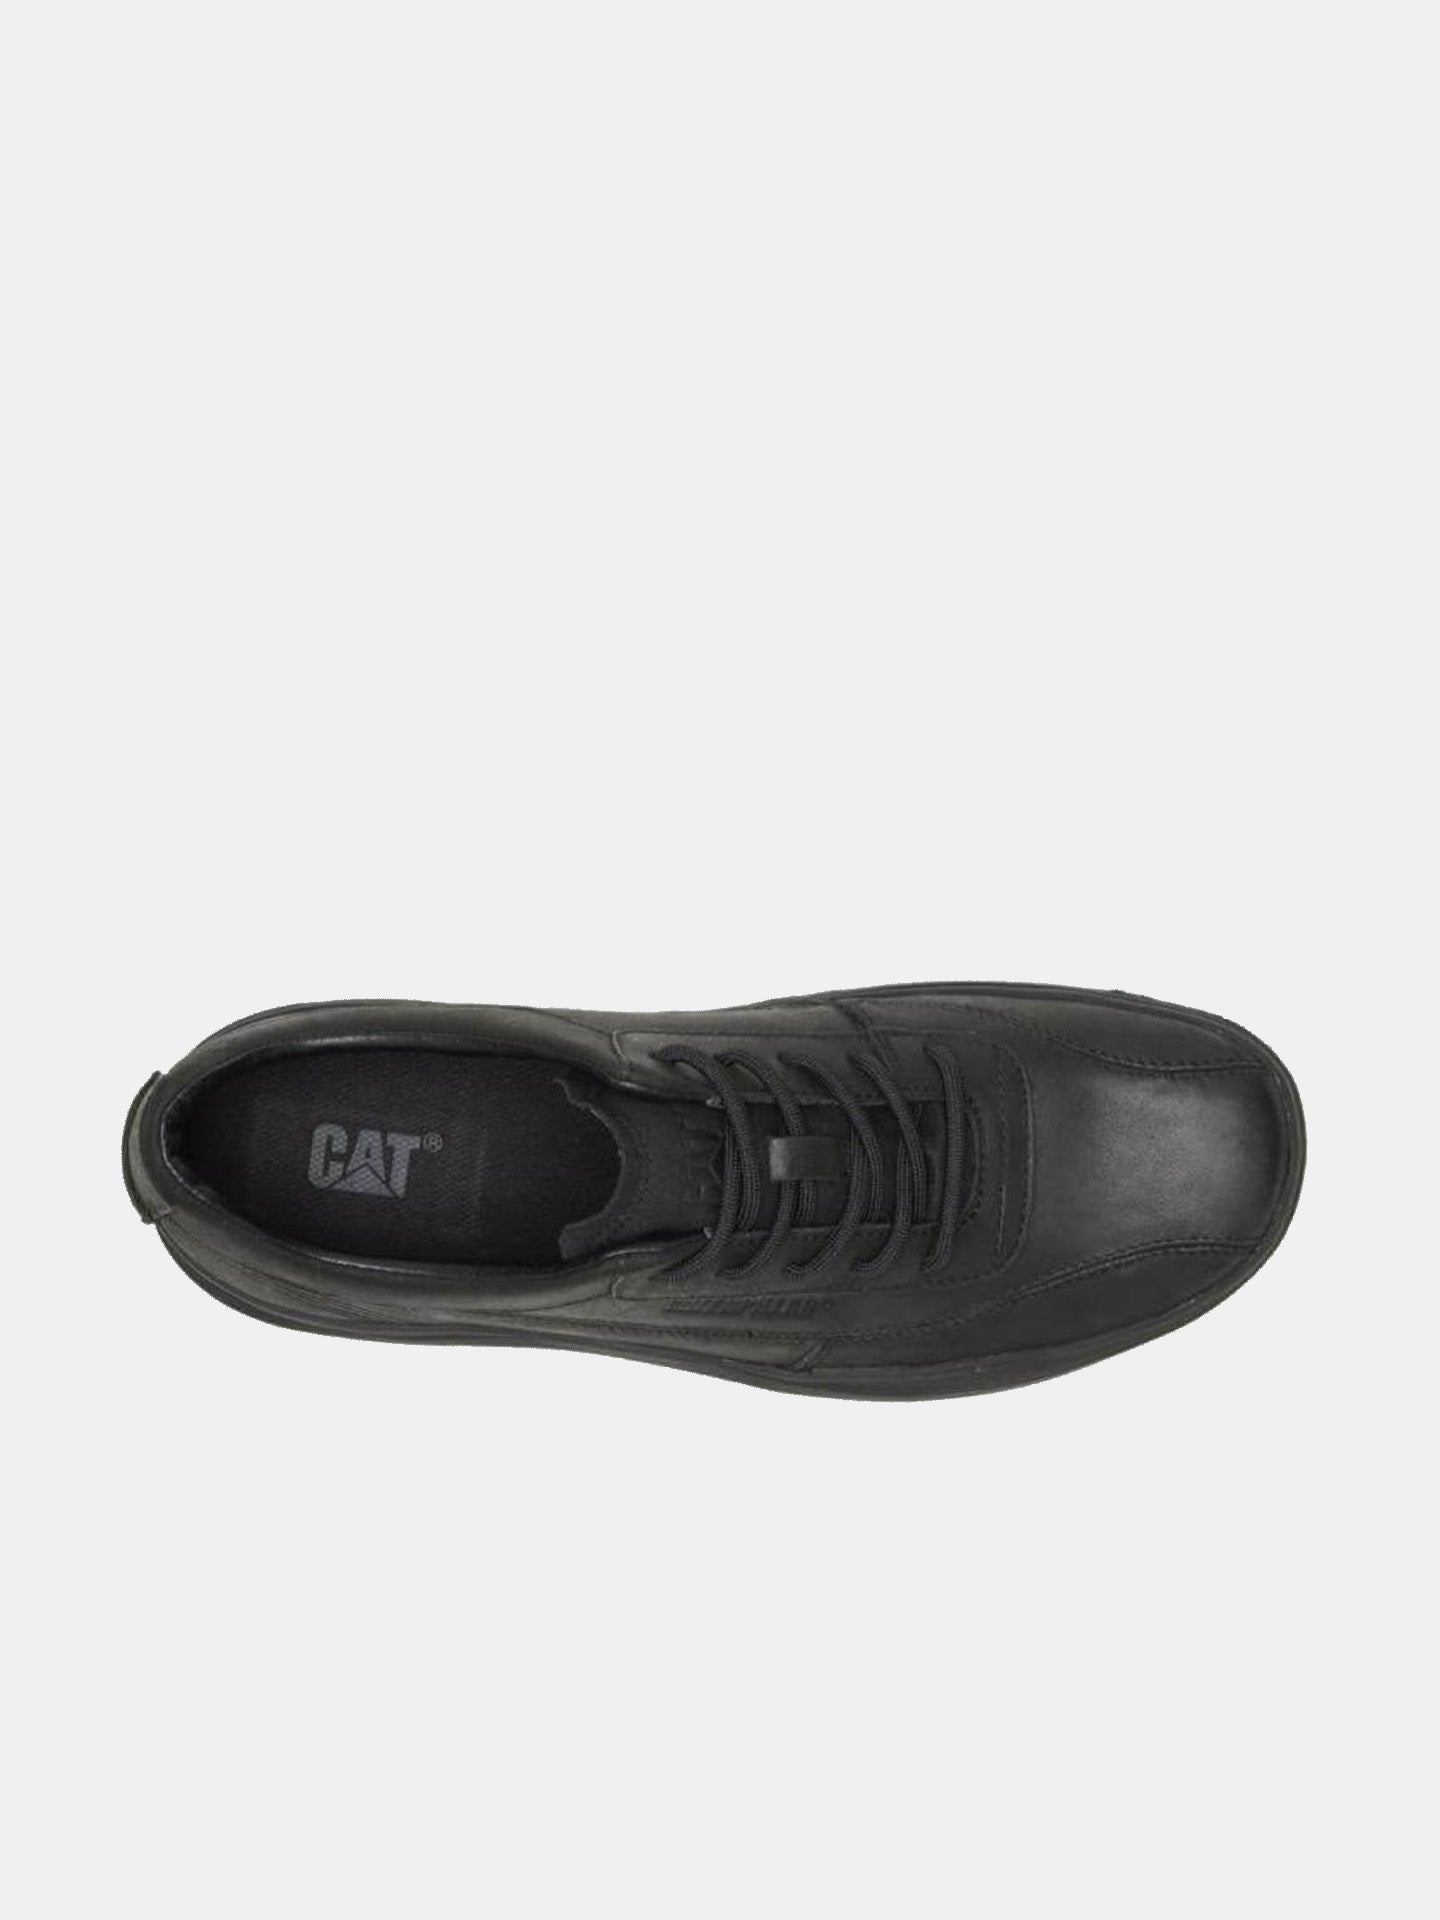 Caterpillar Men's Fused Casual Shoes